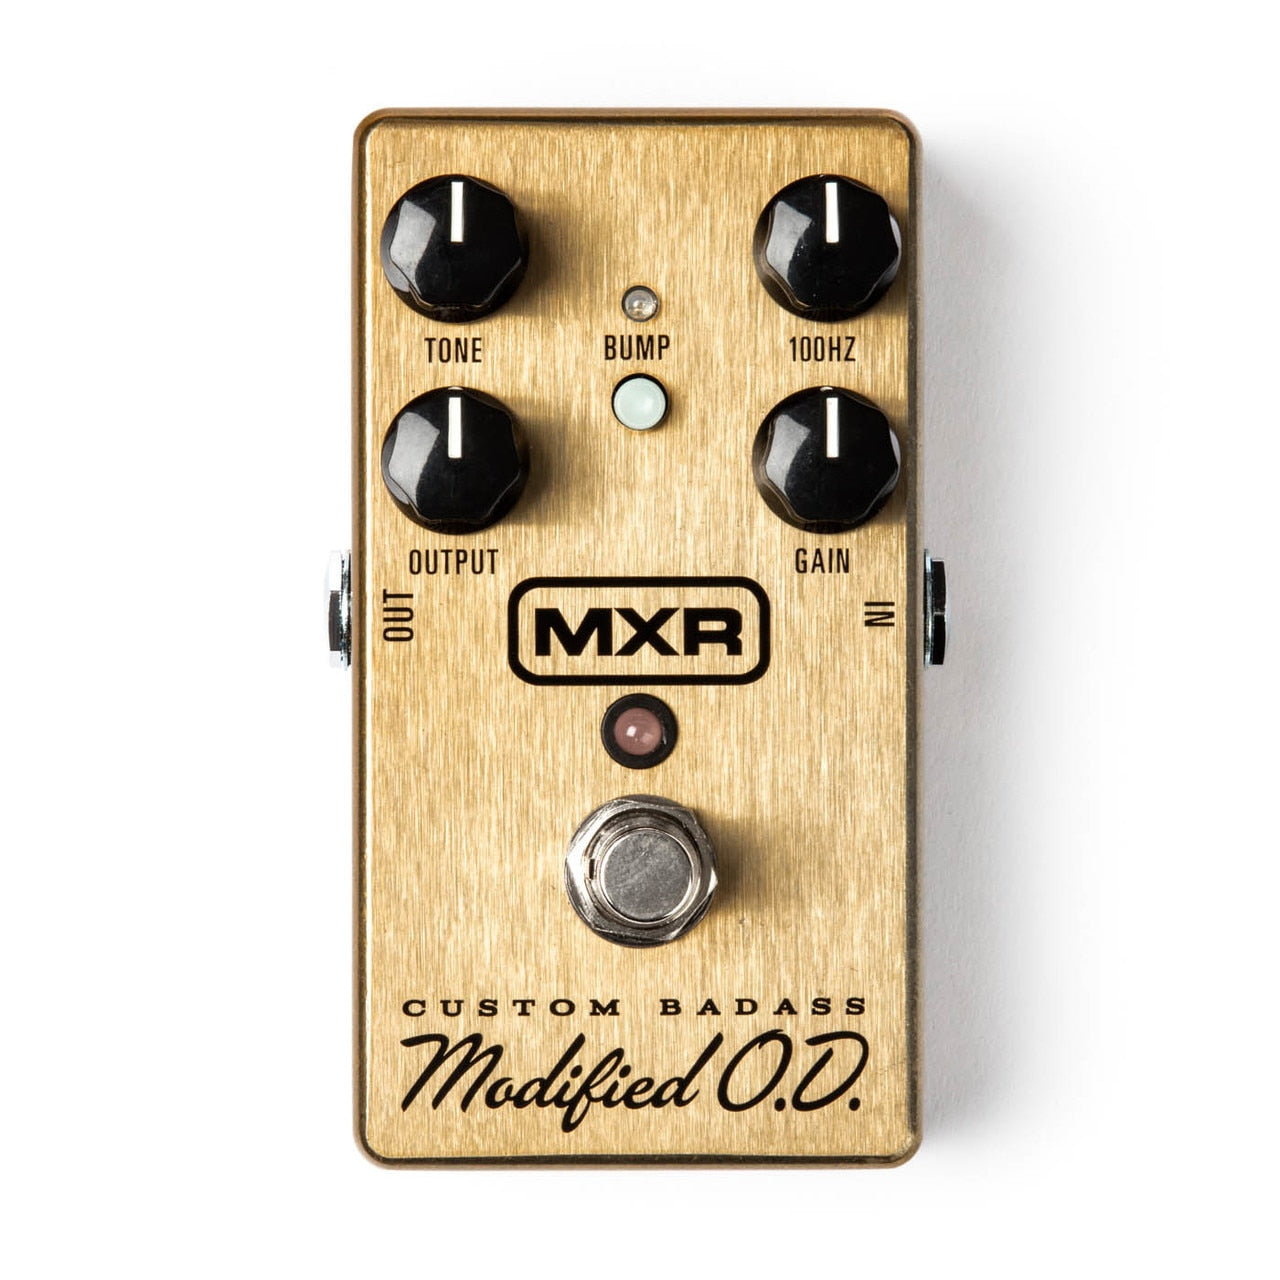 MXR Custom Badass Modified O.D., M77